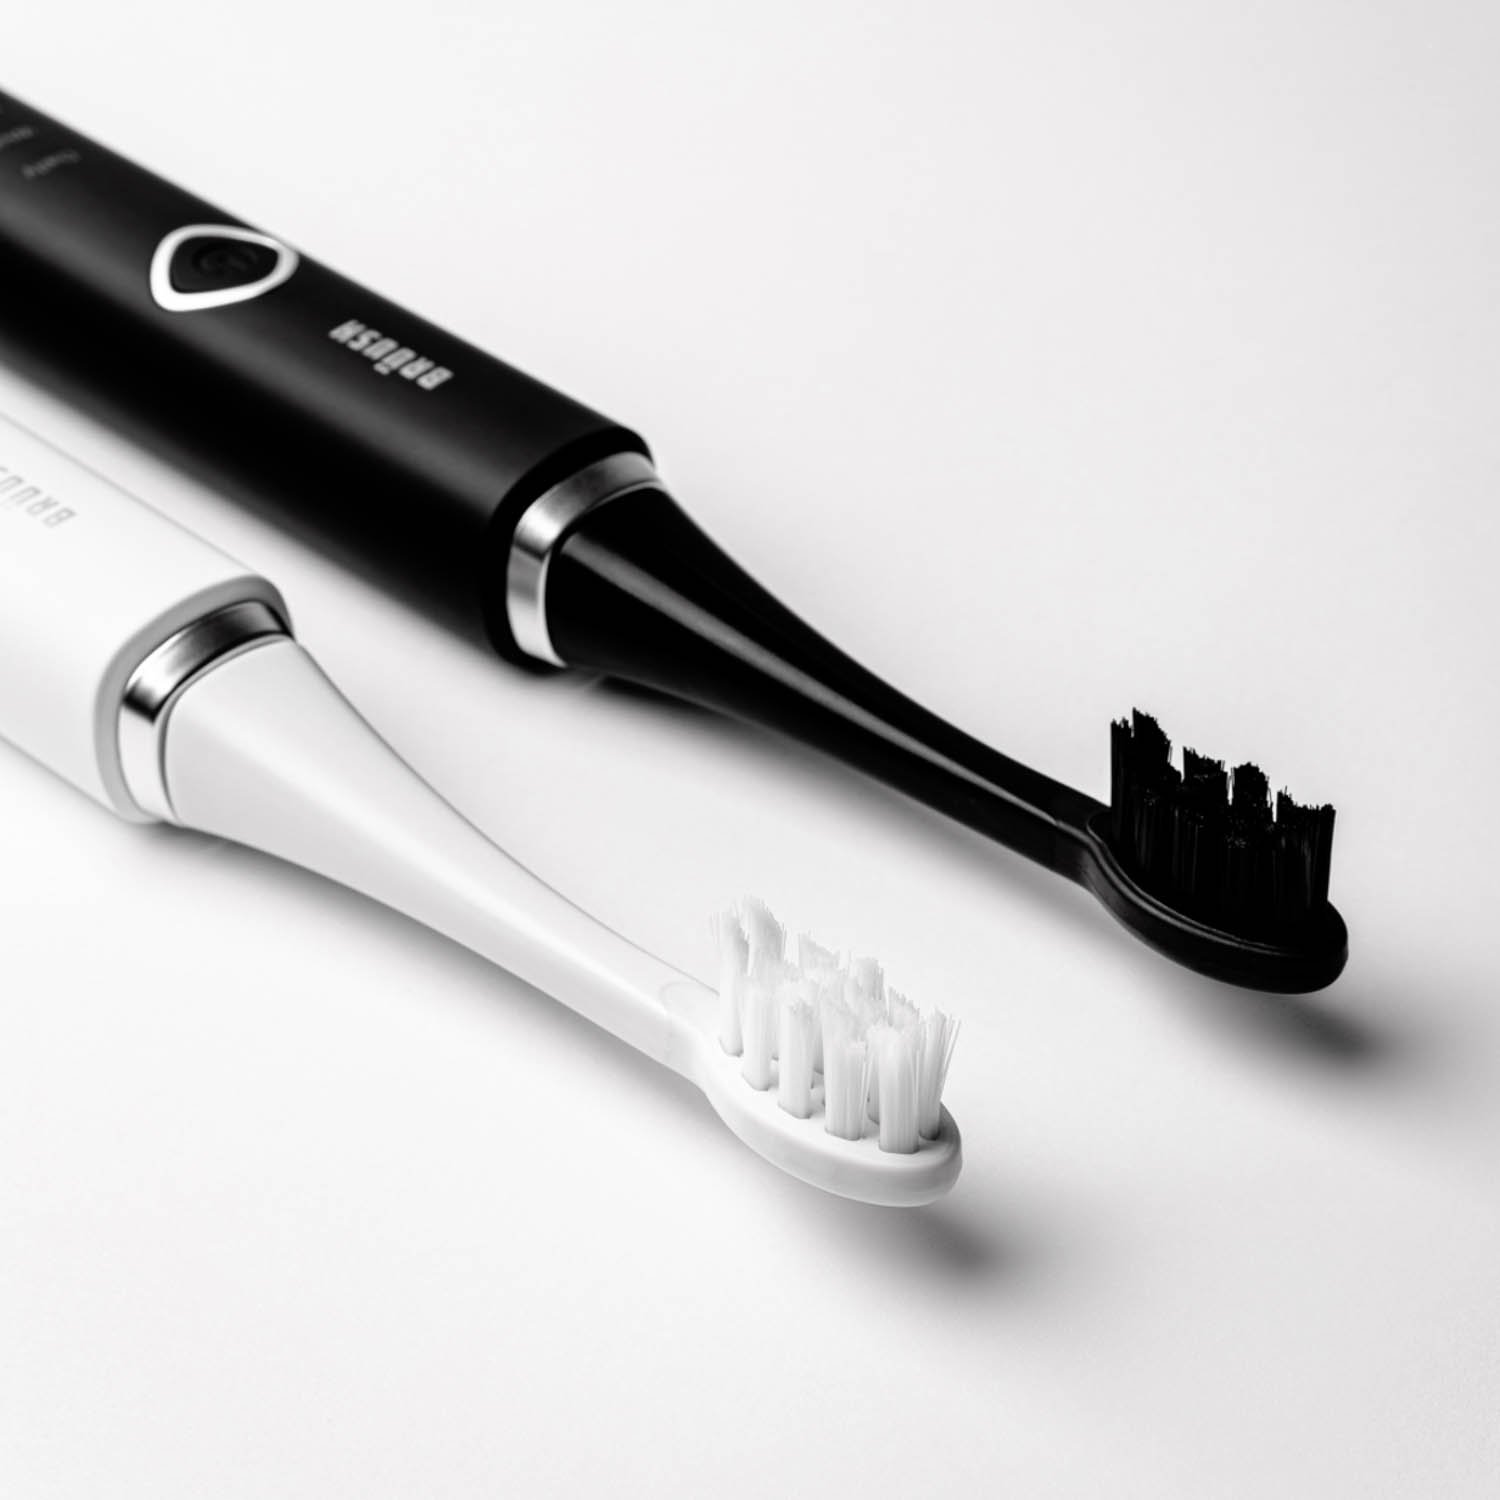 Shop GLEEM Powered Toothbrush Replacement Head Refills